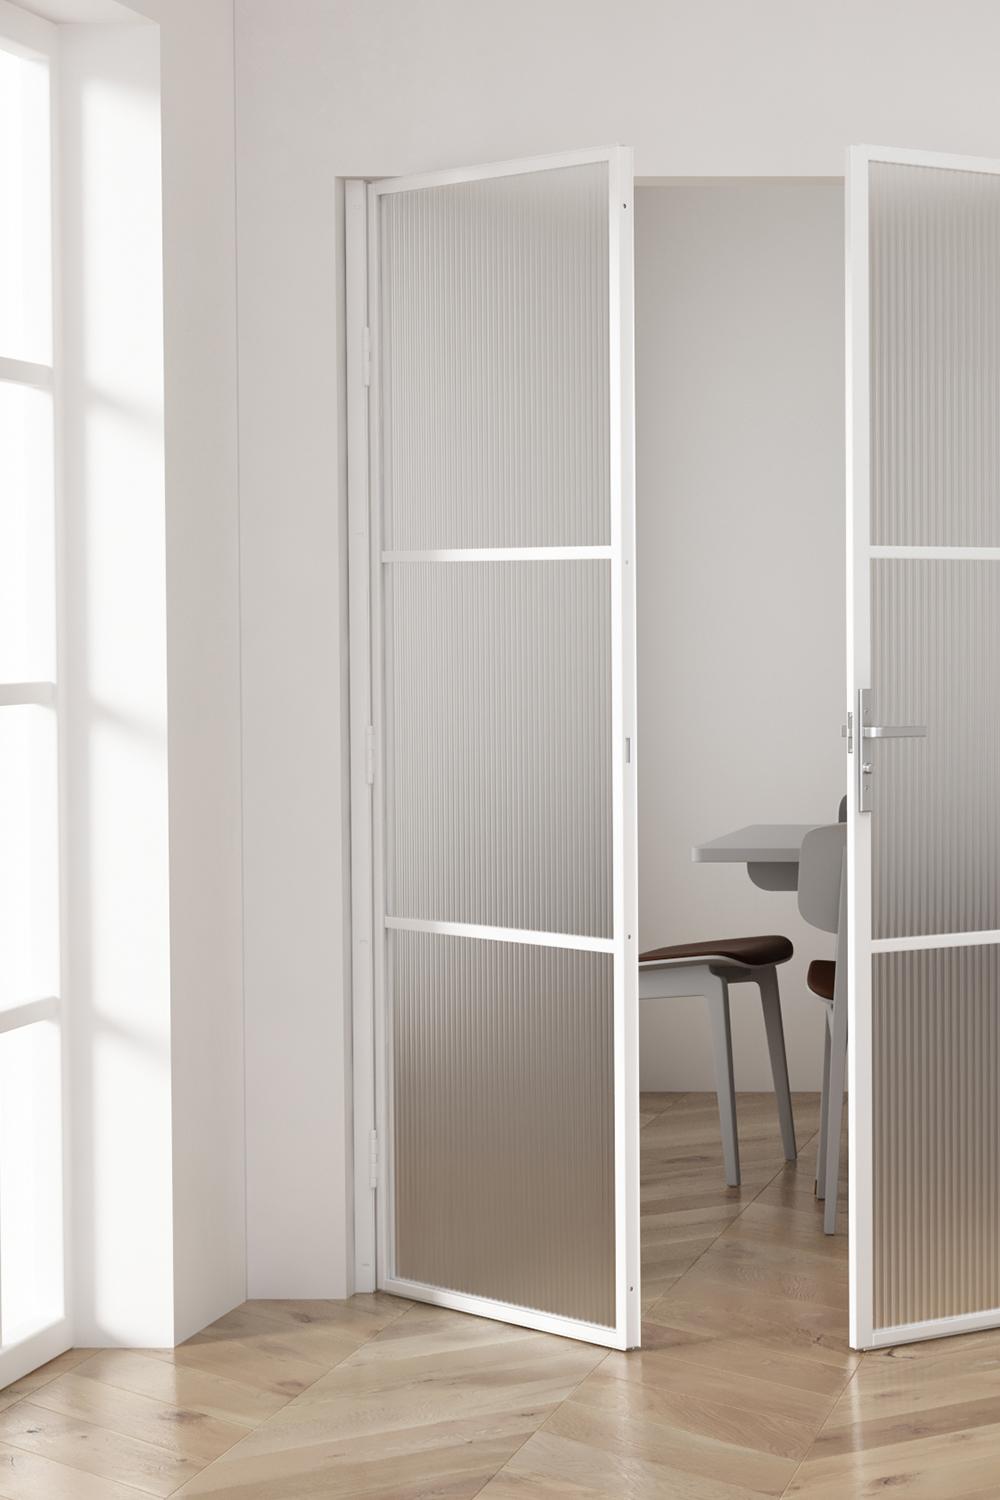 Industrial Wall Double Door Lined Design in White